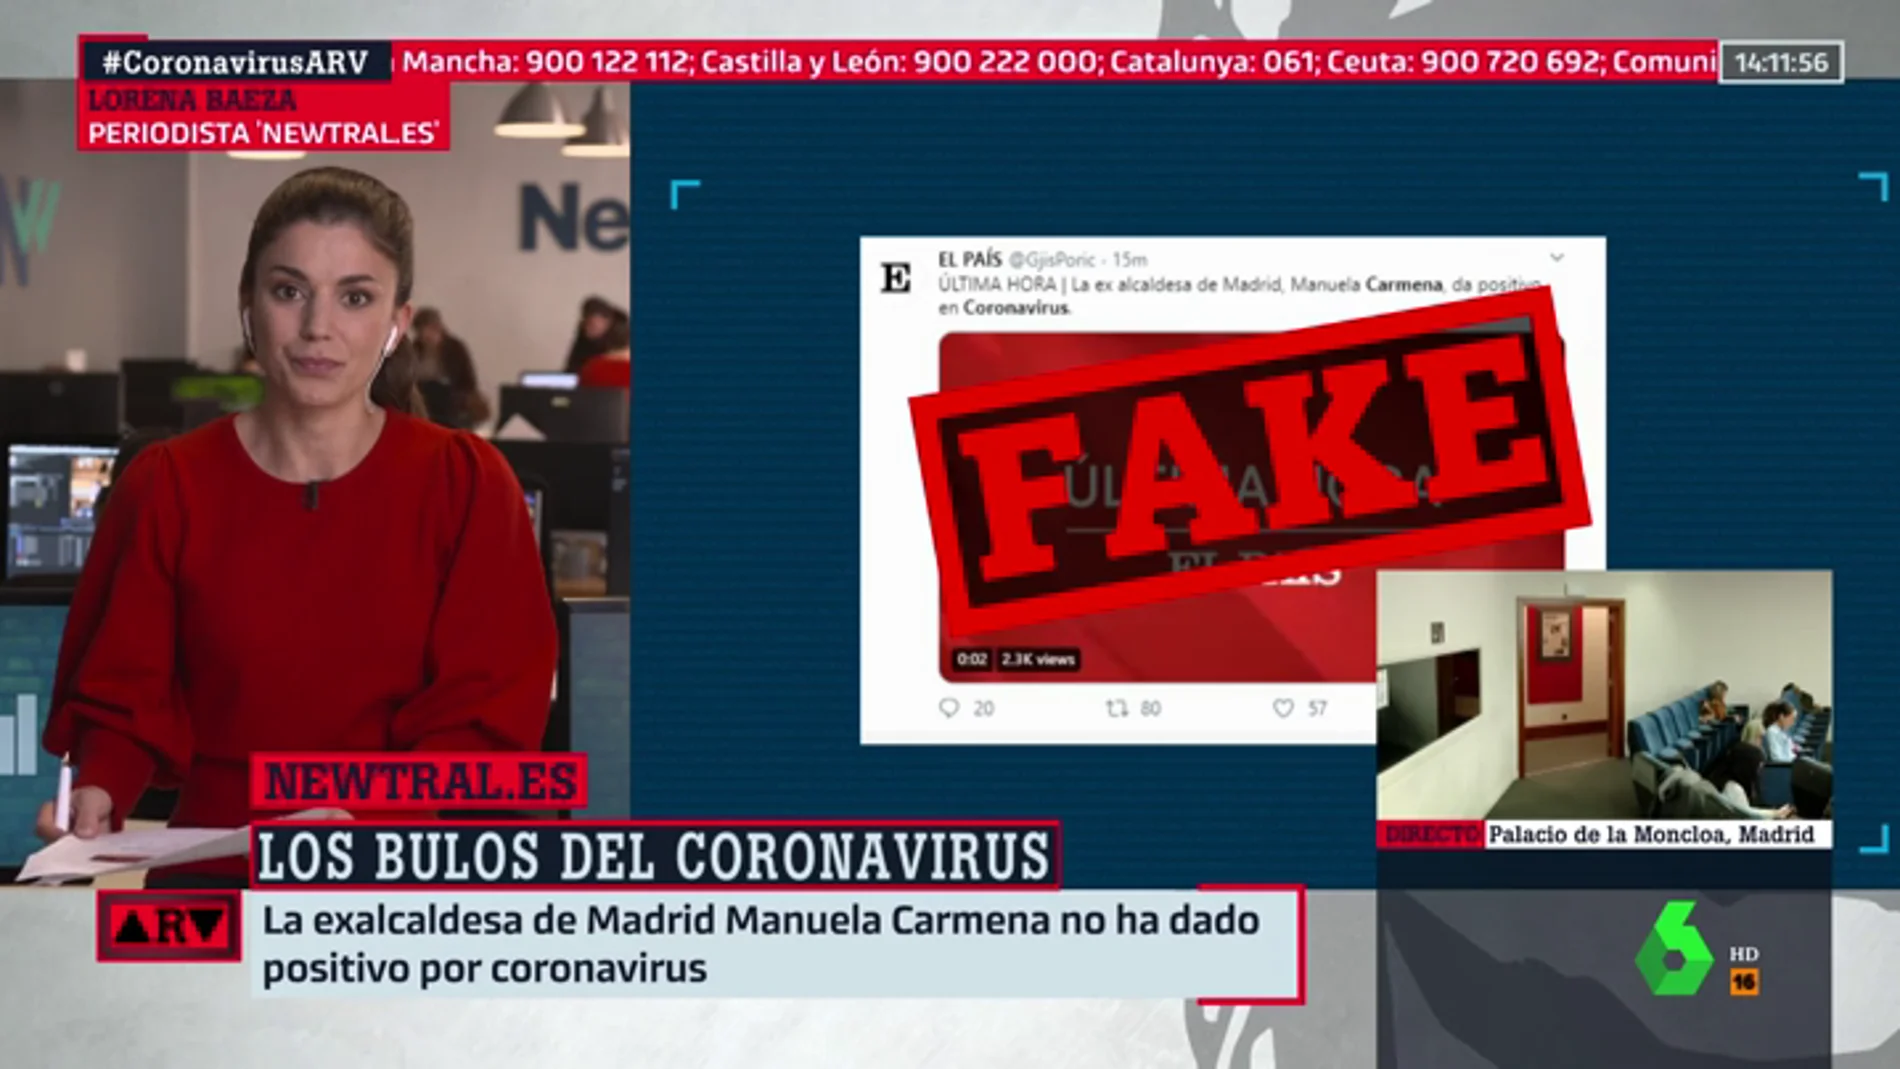 El tuit que asegura que Manuela Carmena tiene coronavirus es falso